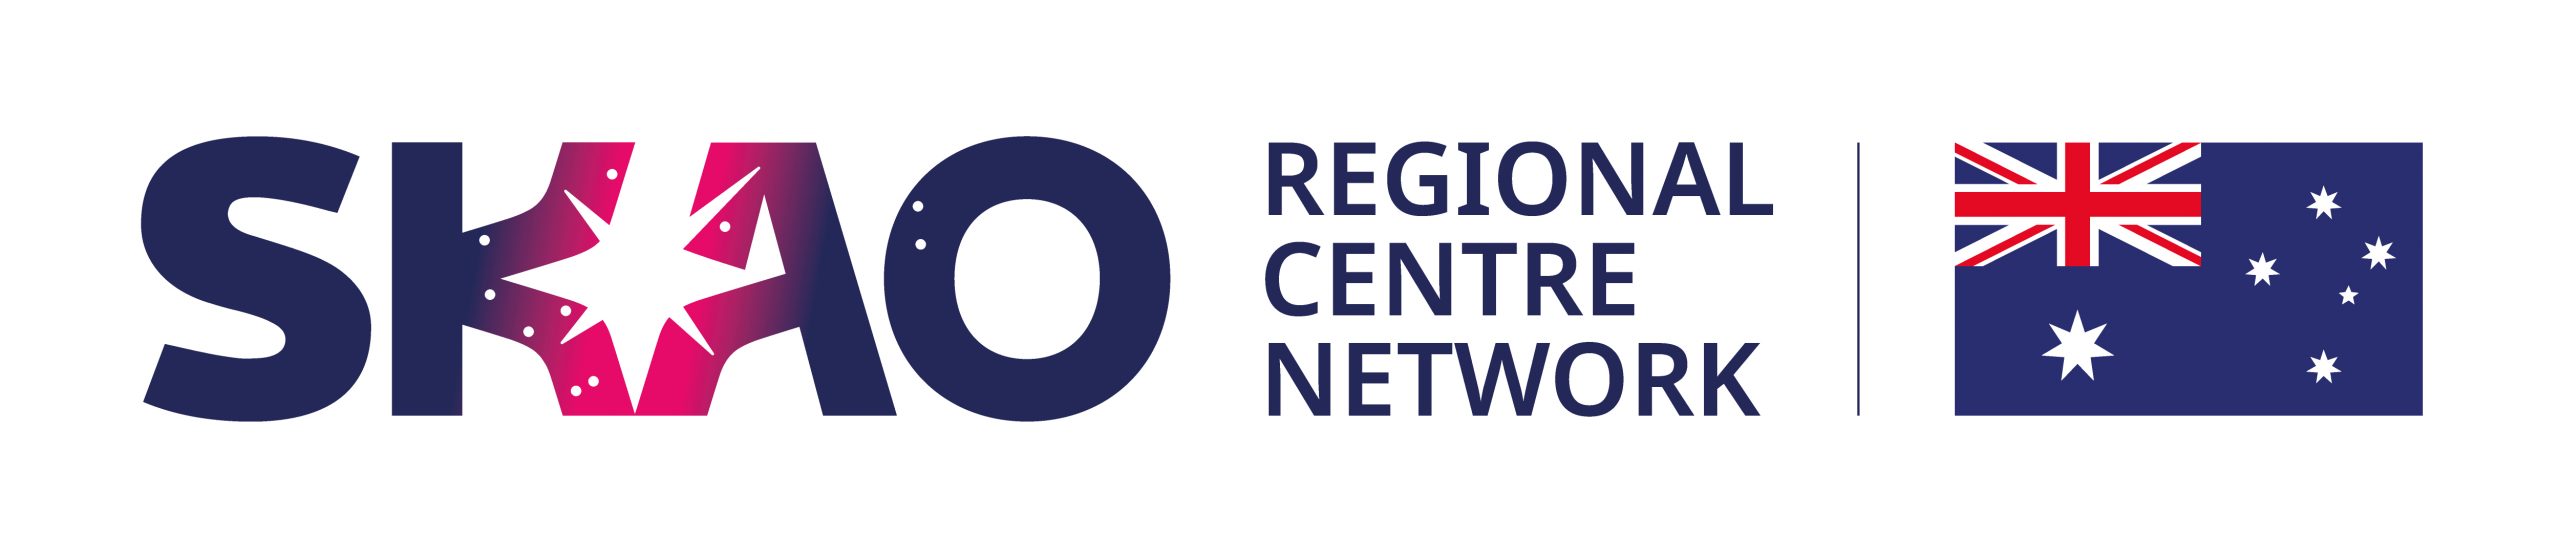 SKAO Regional Centre Network Australia logo